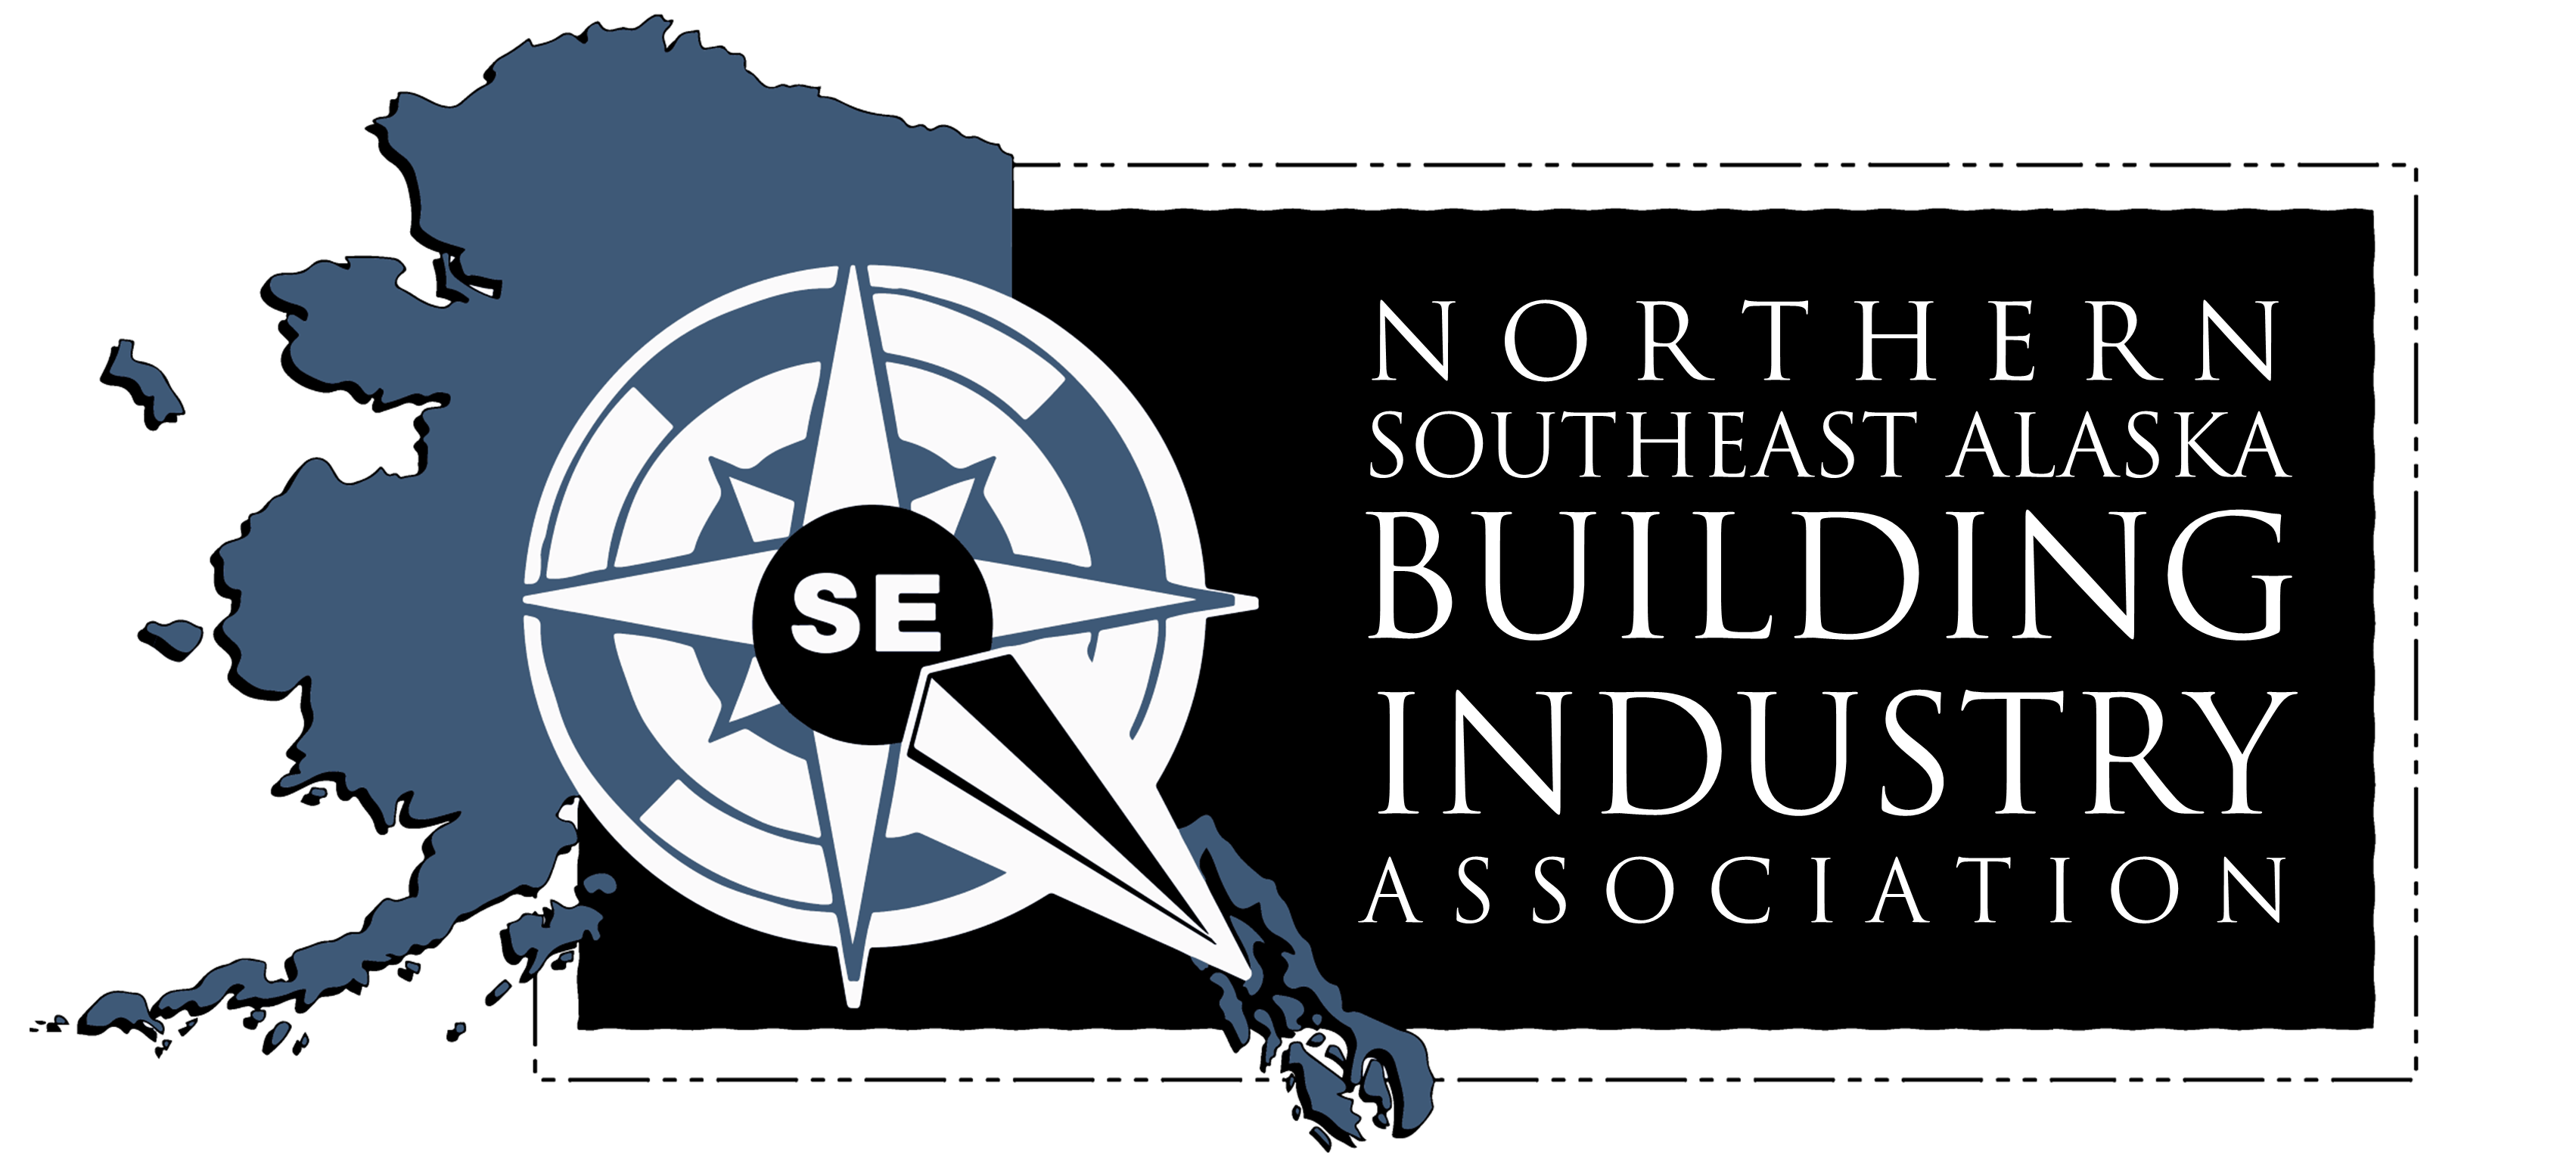 Northern Southeast Alaska Building Industry Association